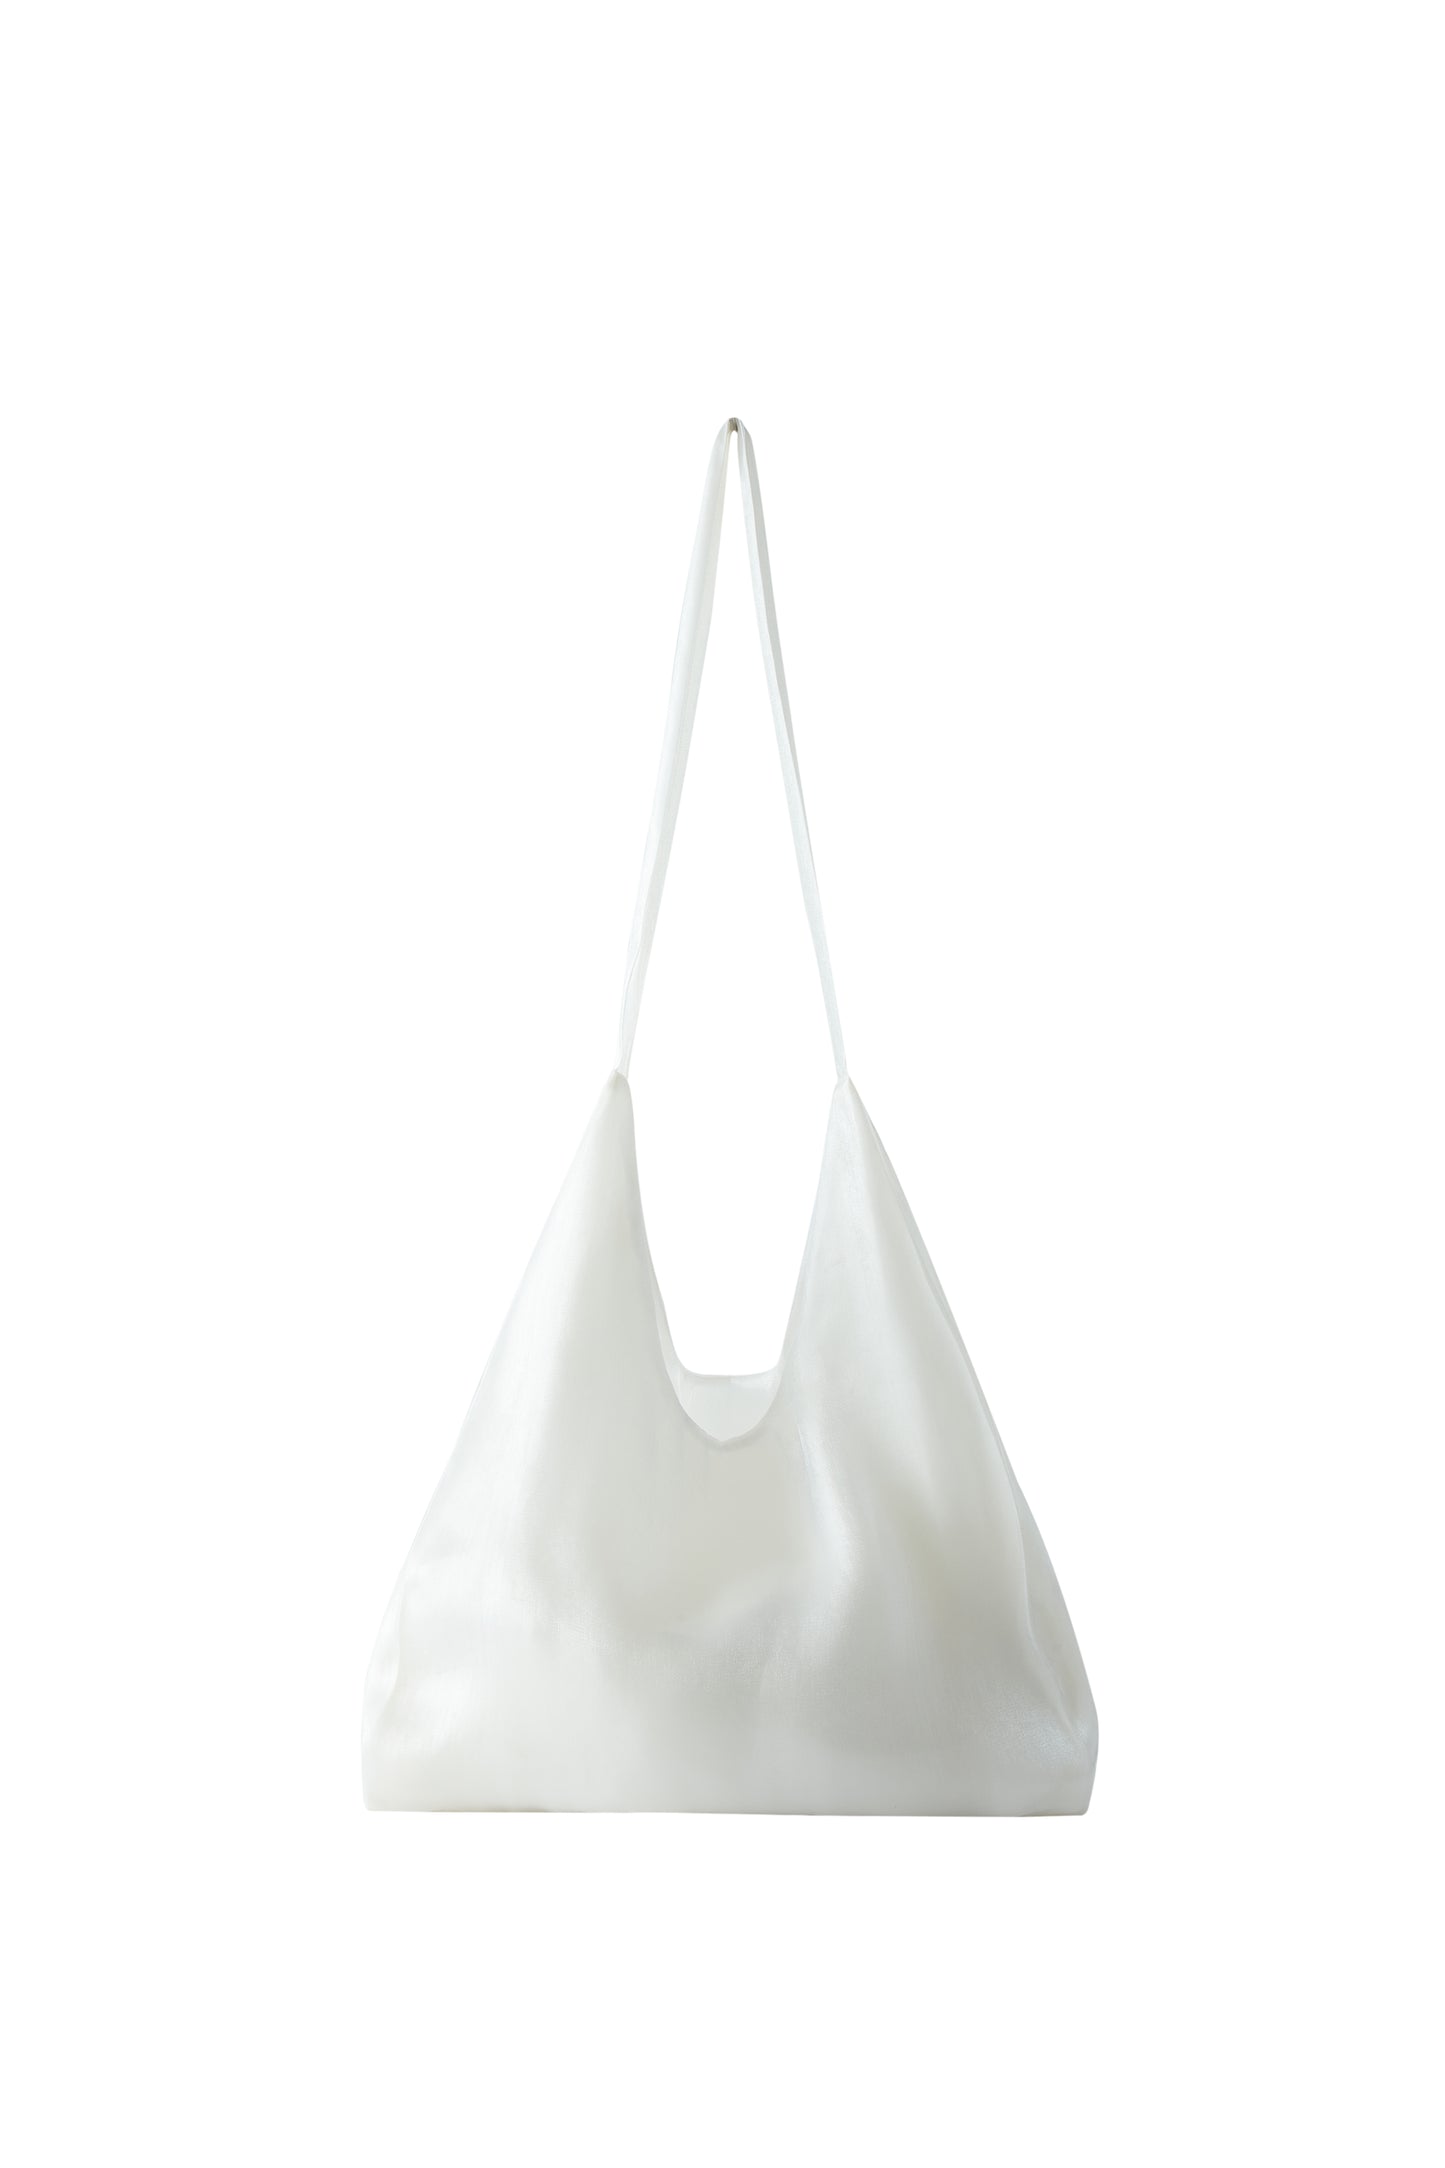 TENERA Ballet One-Shoulder Bag/Pearl White